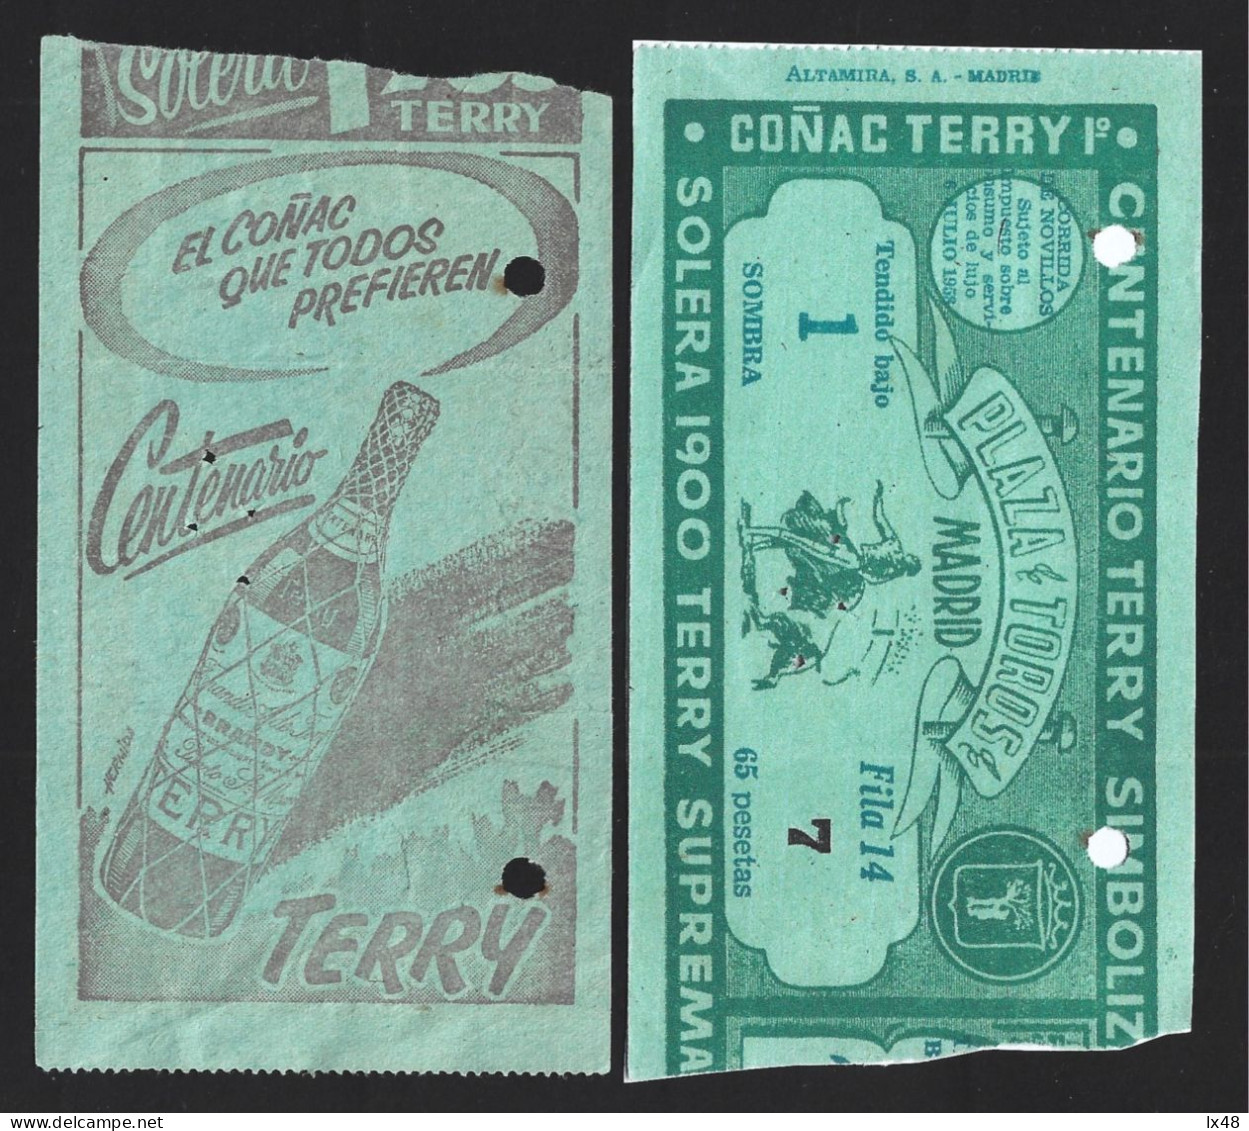 Terry Cognac. 100 Years Of Terry Cognac. To Drink. Trinken. Terry. Conac. Entrance Ticket To The Plaza De Toros In Madri - Liqueur & Bière